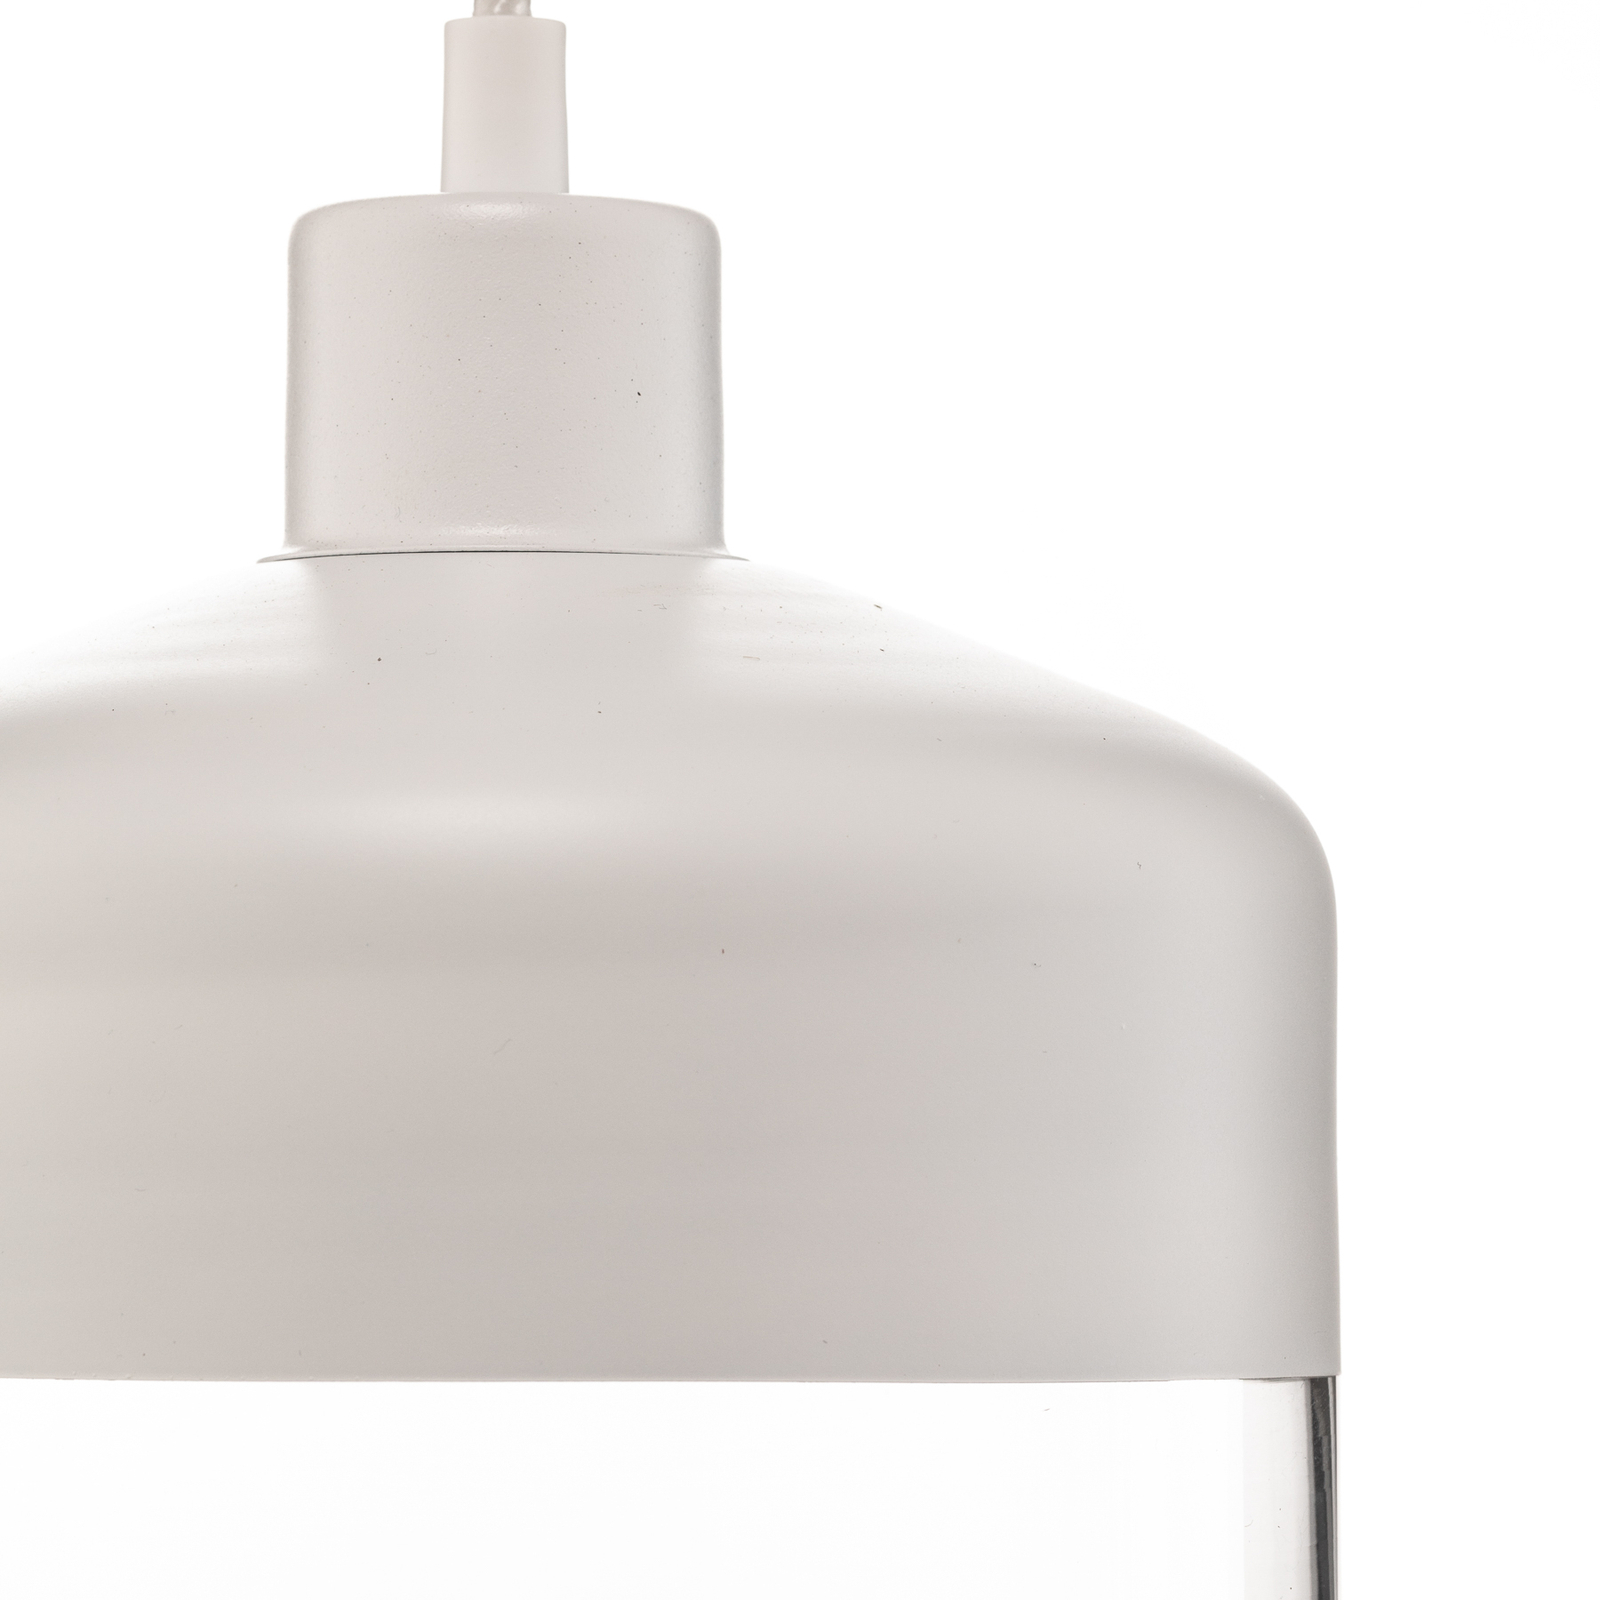 Hanglamp Monochrome Flash helder/wit Ø 17cm